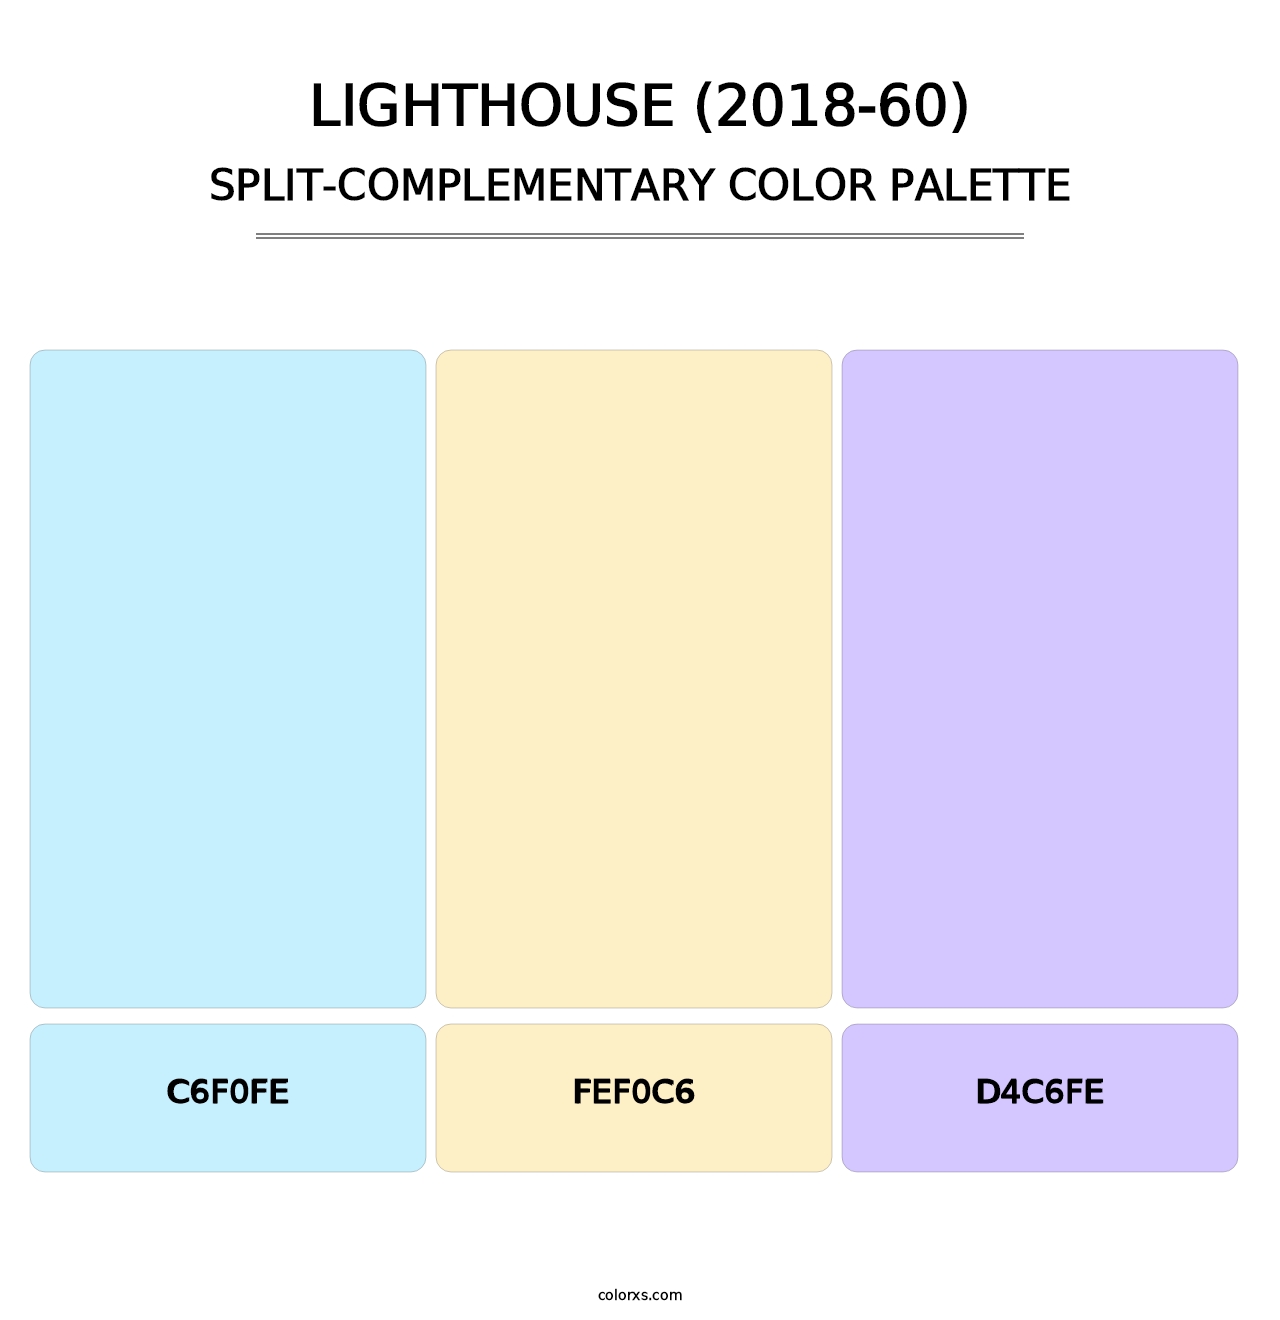 Lighthouse (2018-60) - Split-Complementary Color Palette